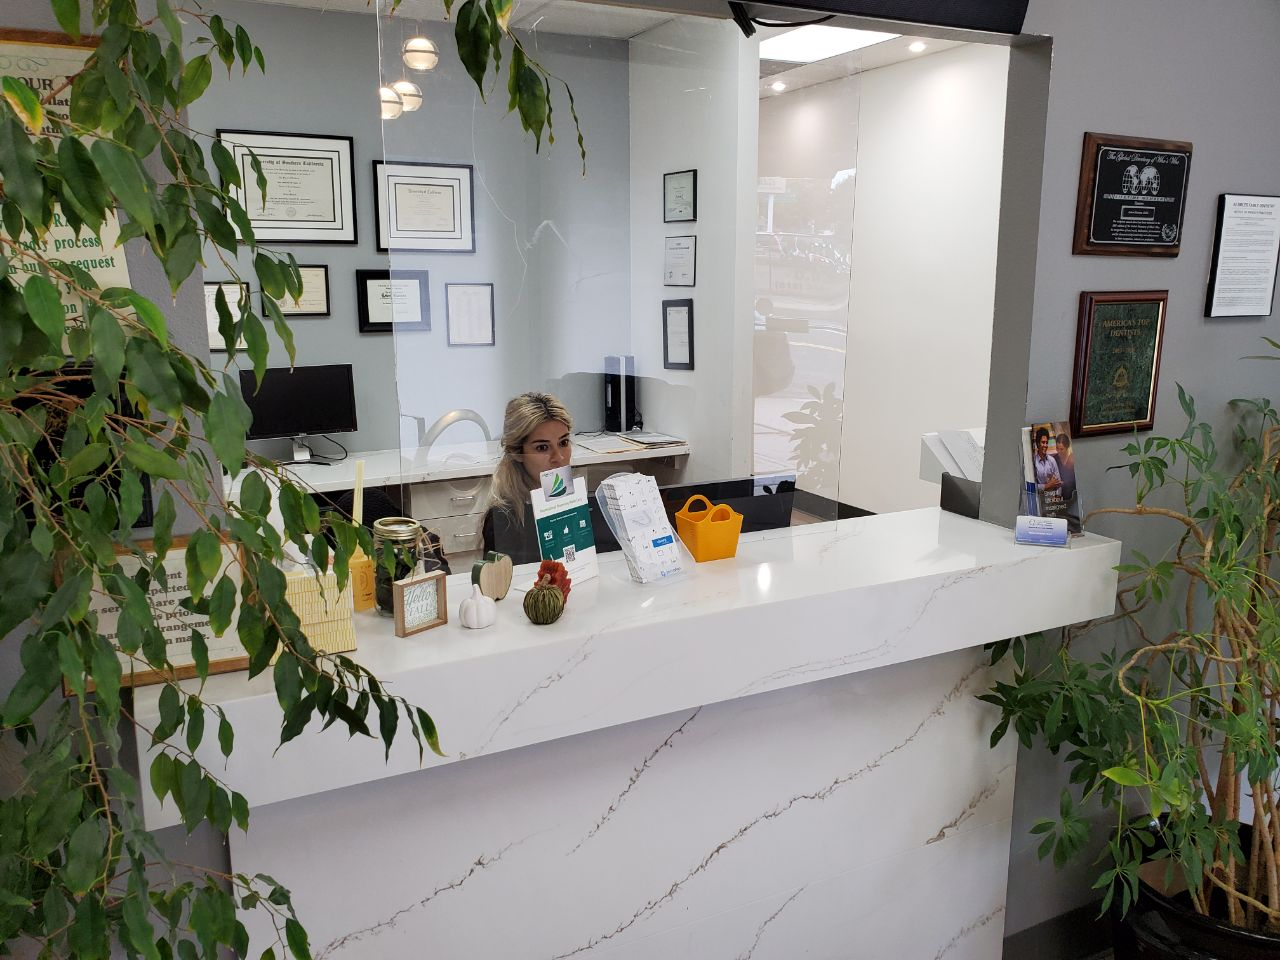 An image of Dr. Robert Khanian’s dental office in Tarzana, California